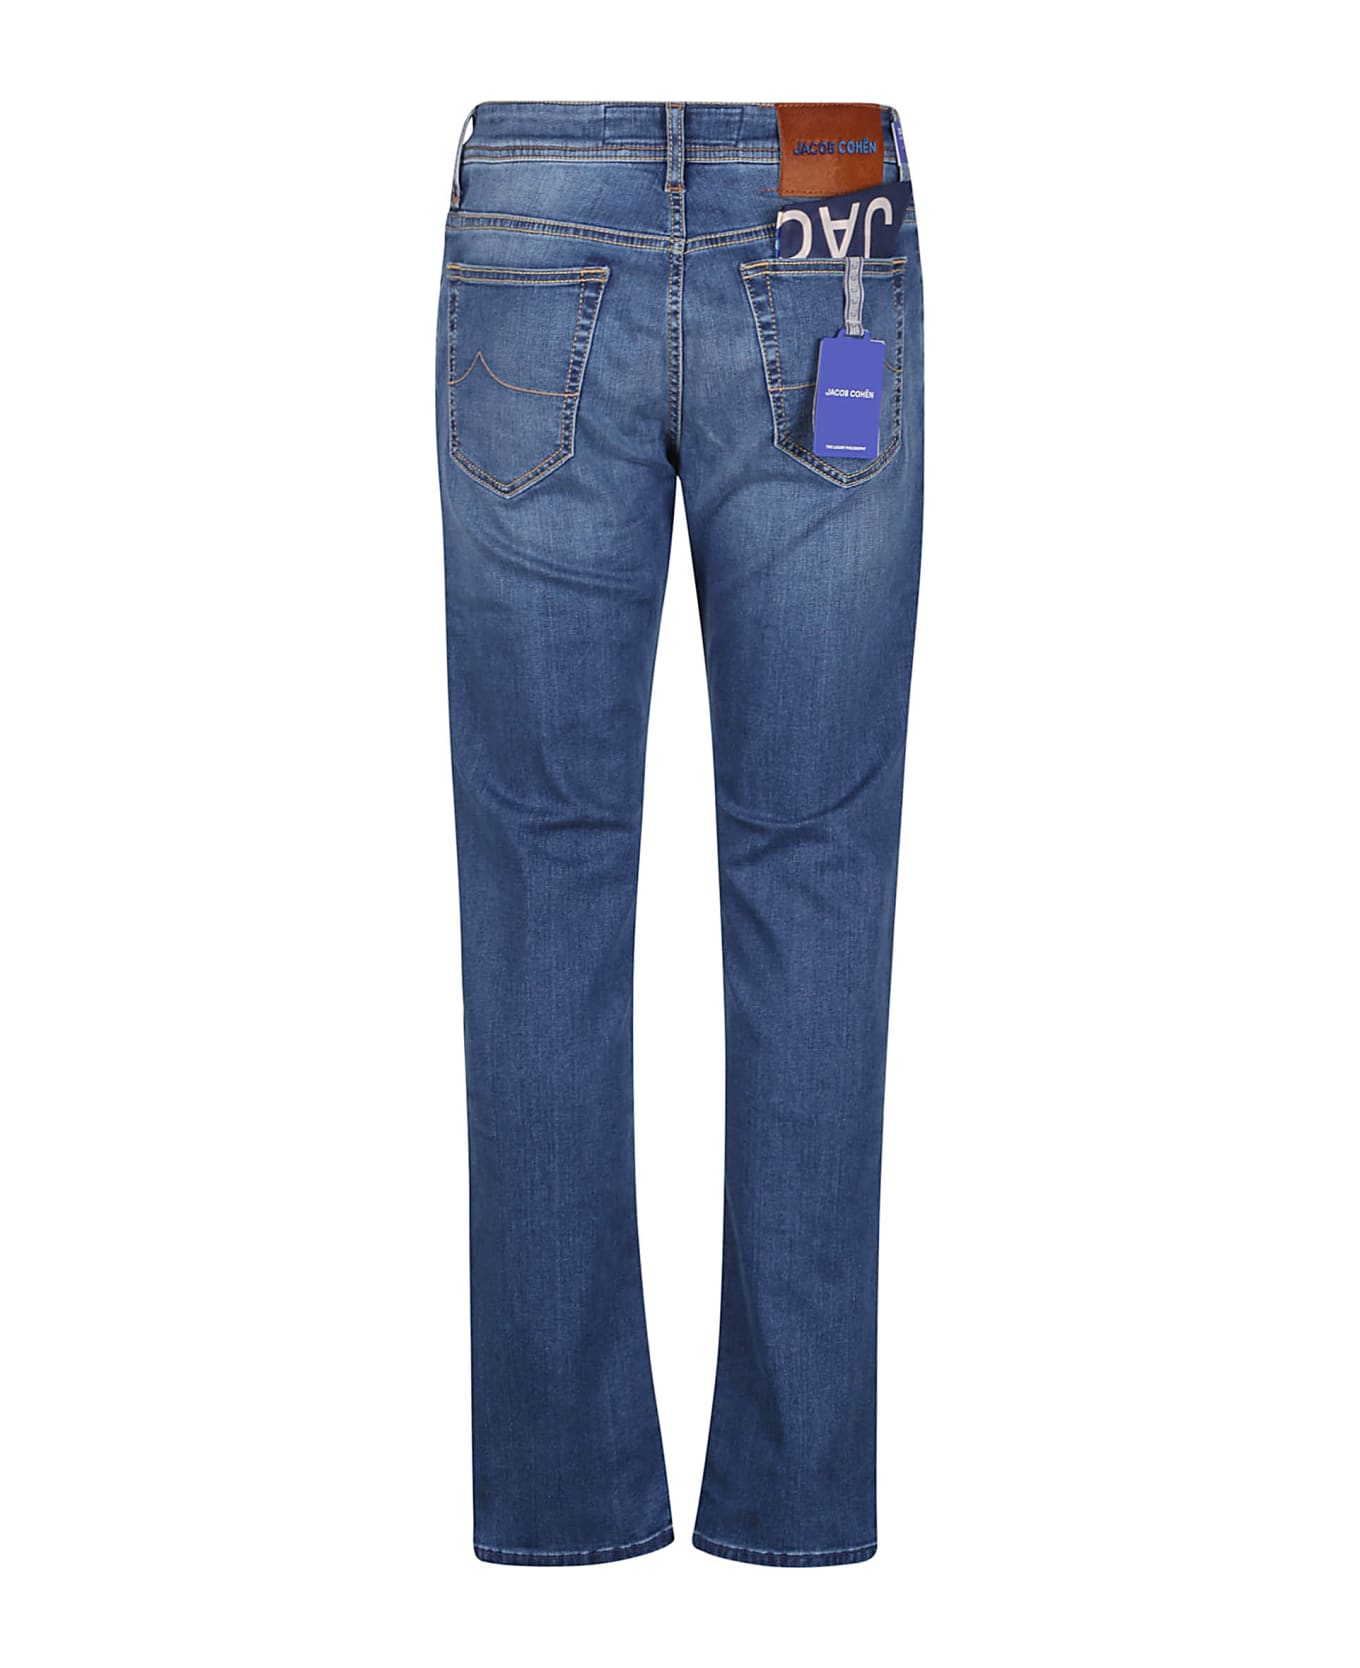 Jacob Cohen 5 Pocket Jeans Slim Fit Bard Fast - D Blu